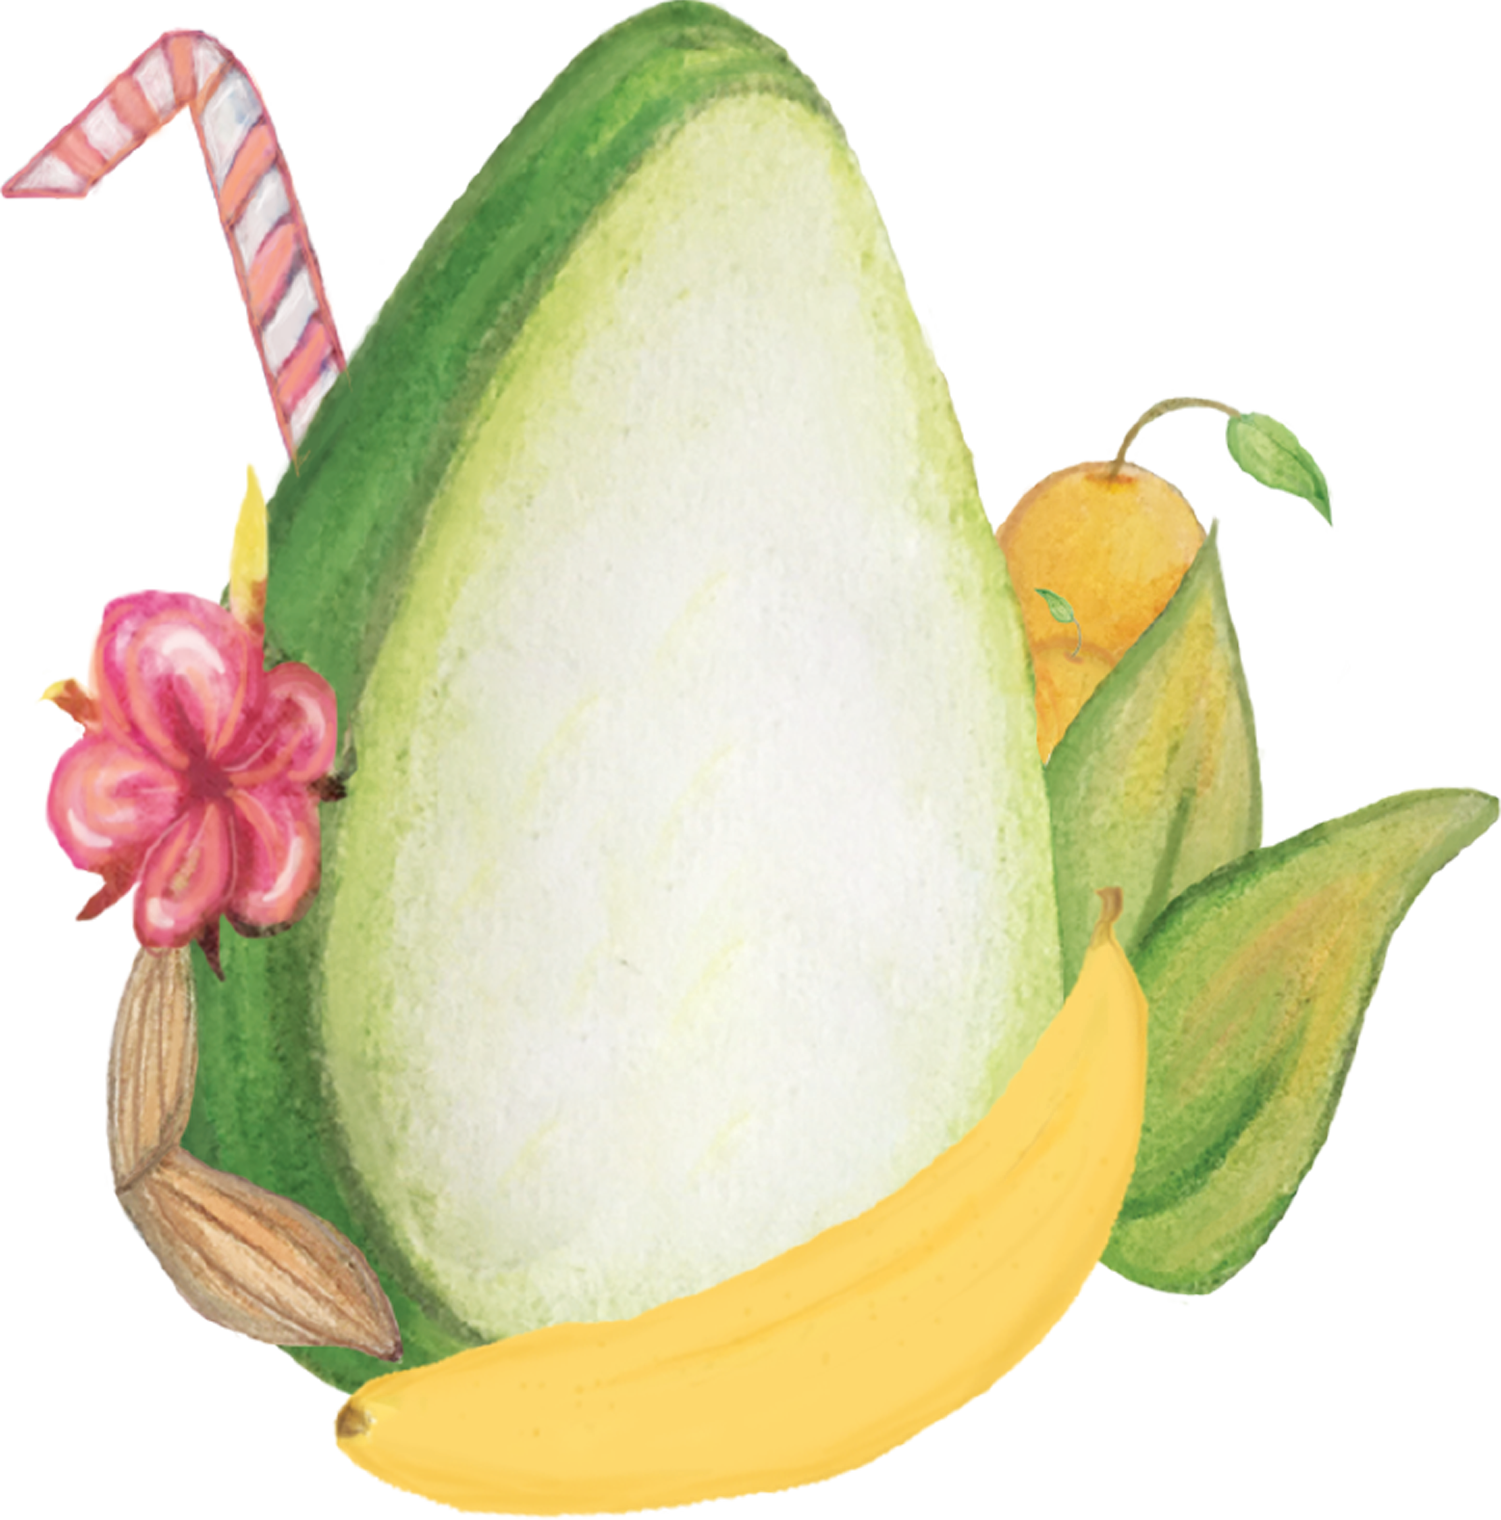 Avocado illustration 